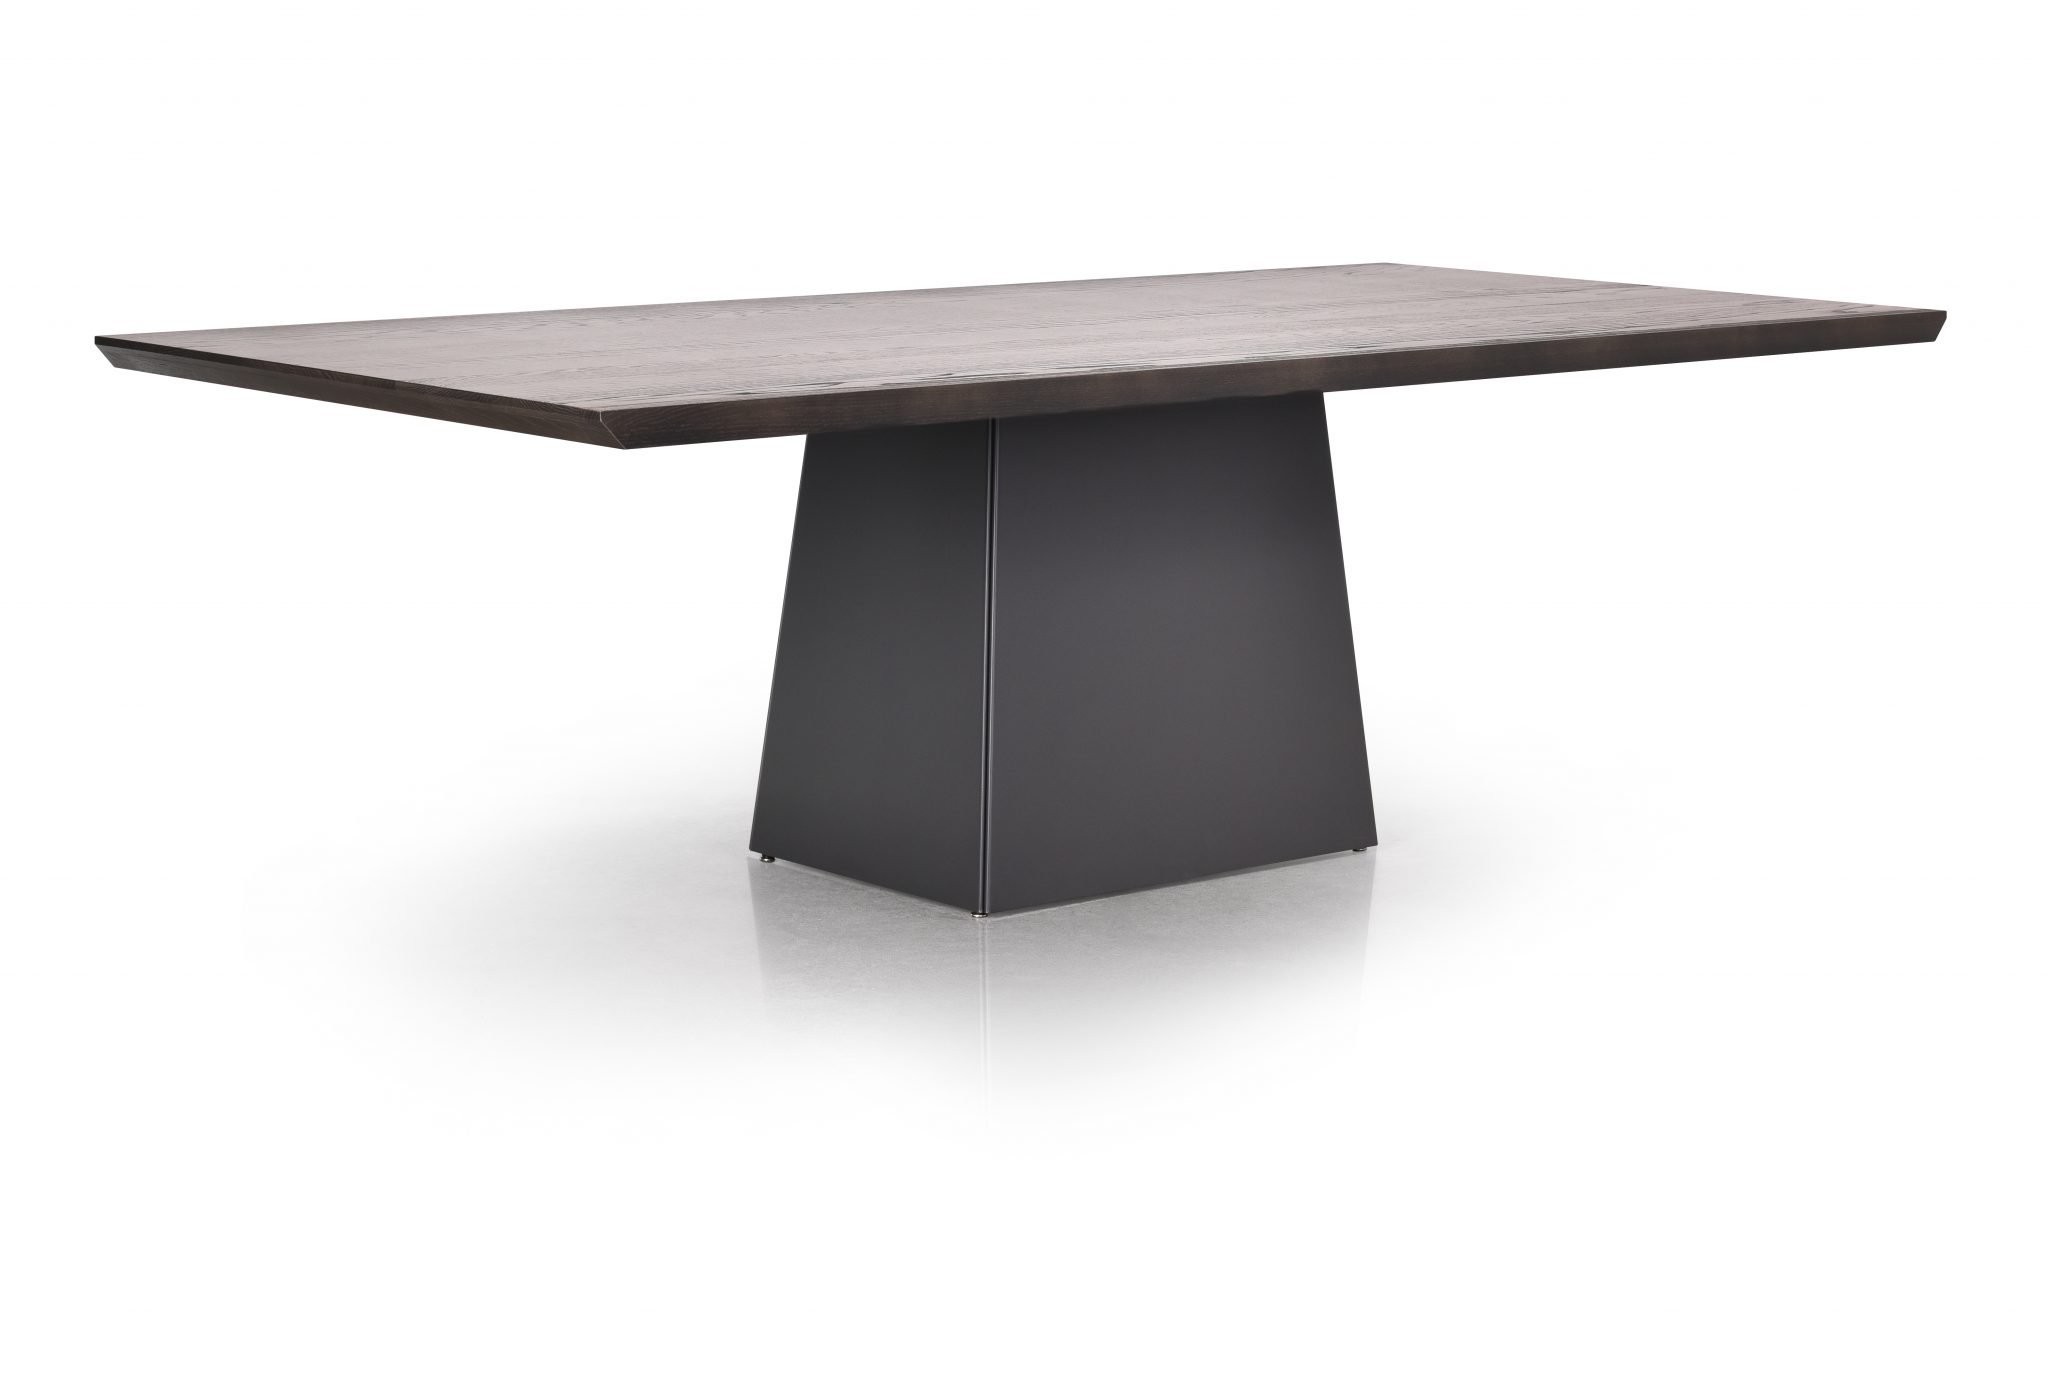 sculpture_dining_table_parnian_furniture